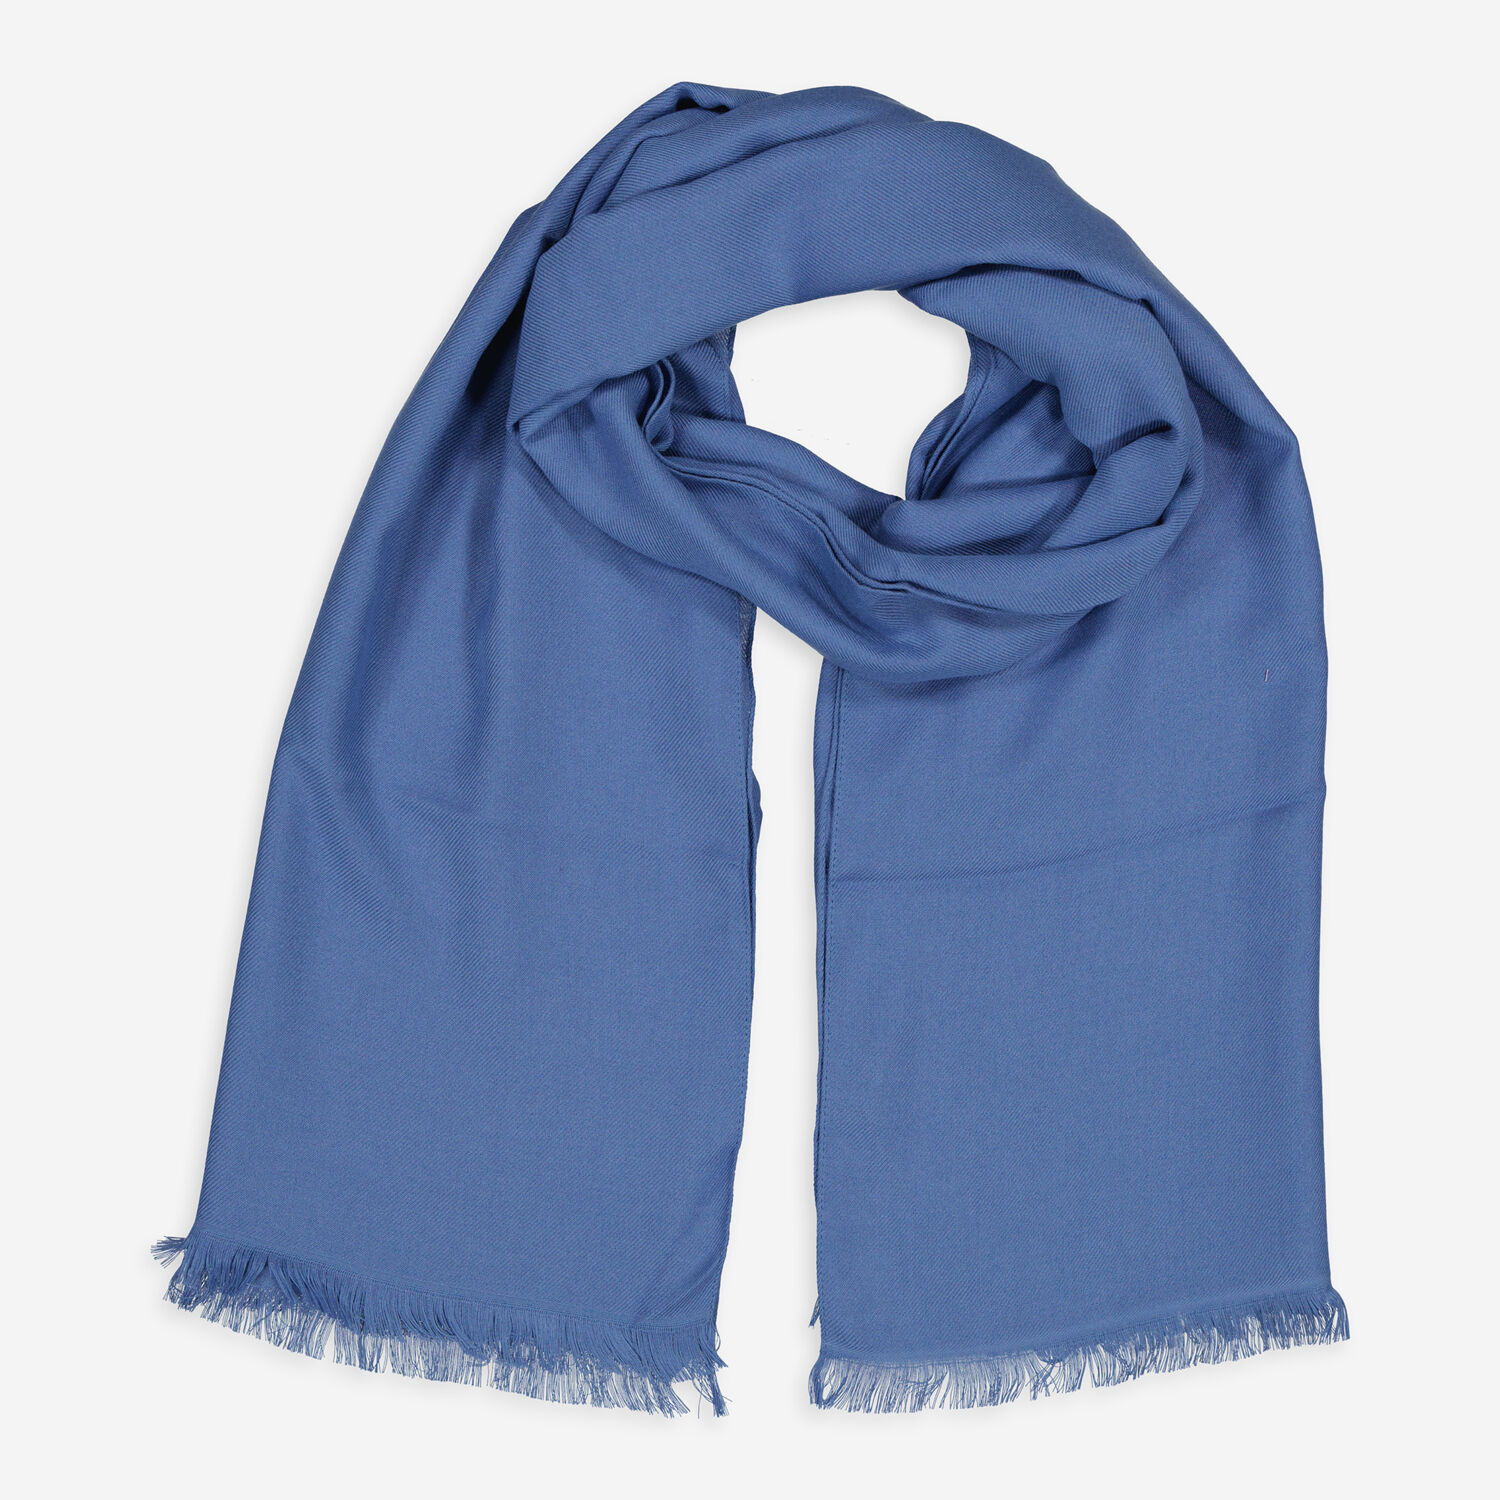 Темно-синий шарф с бахромой Galitzine шарф timberland с бахромой синий